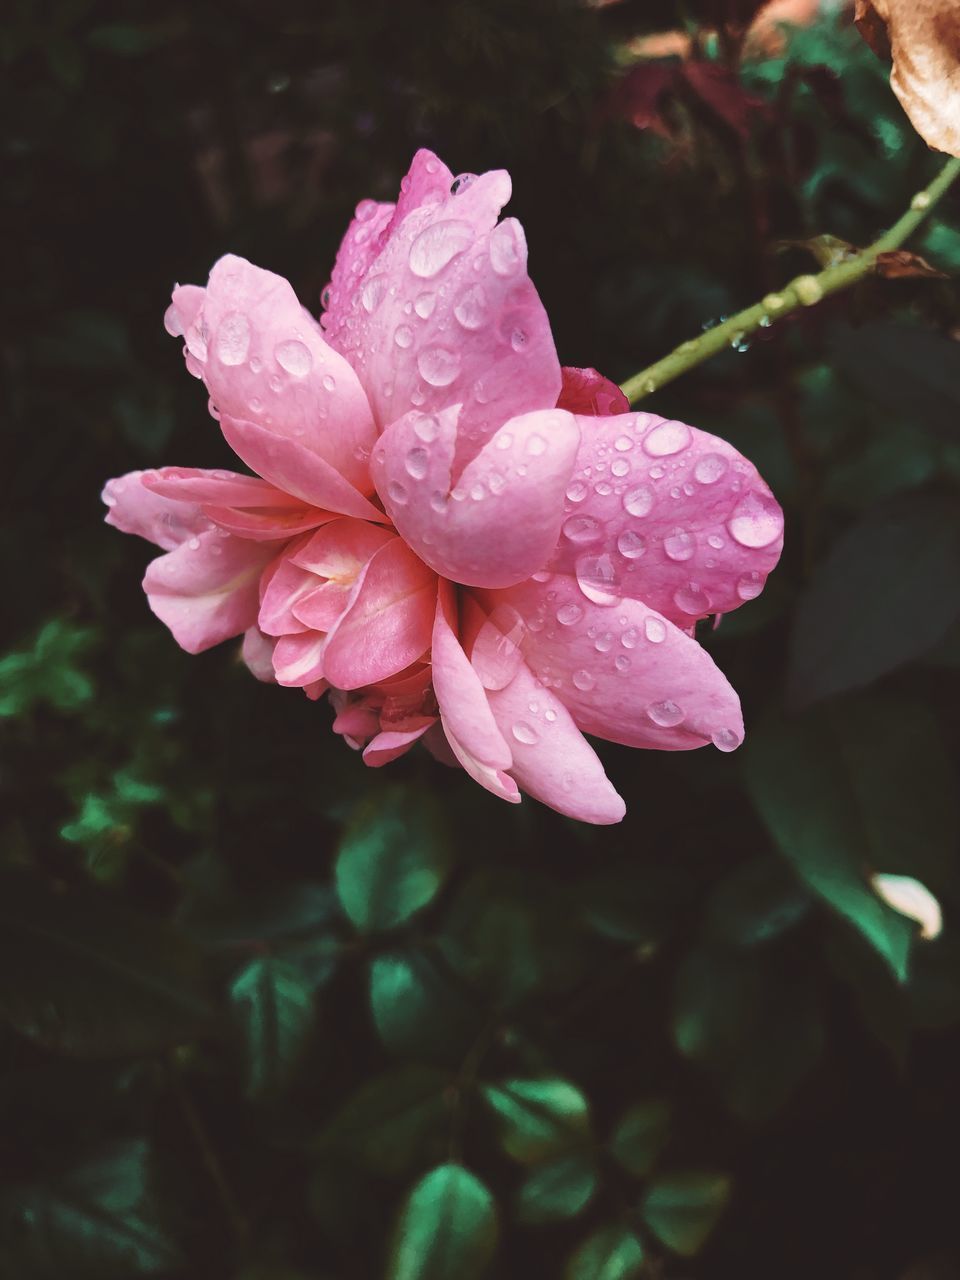 CLOSE-UP OF WET PINK ROSE FLOWER